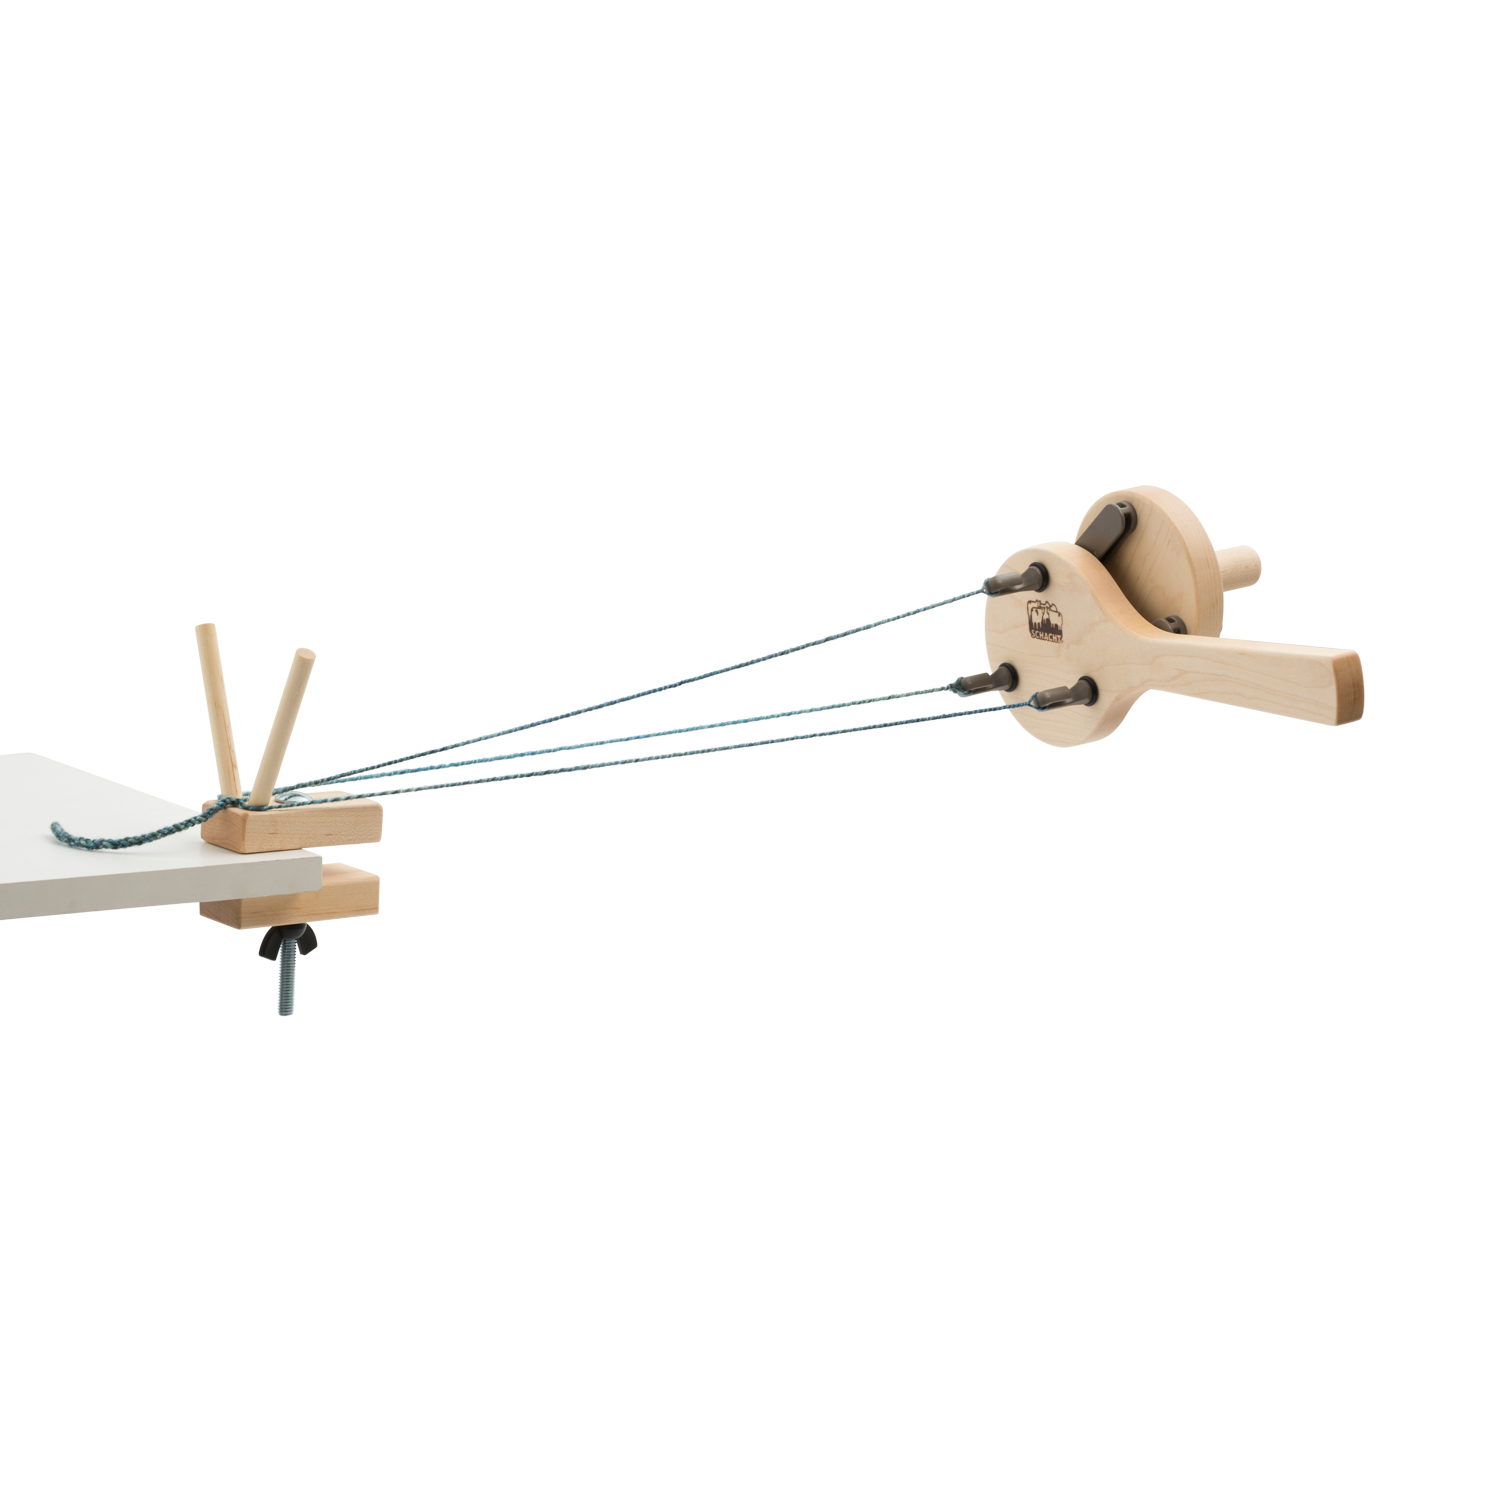 Schacht Rope Machine - Rope Maker Tool - Mielke's Fiber Arts